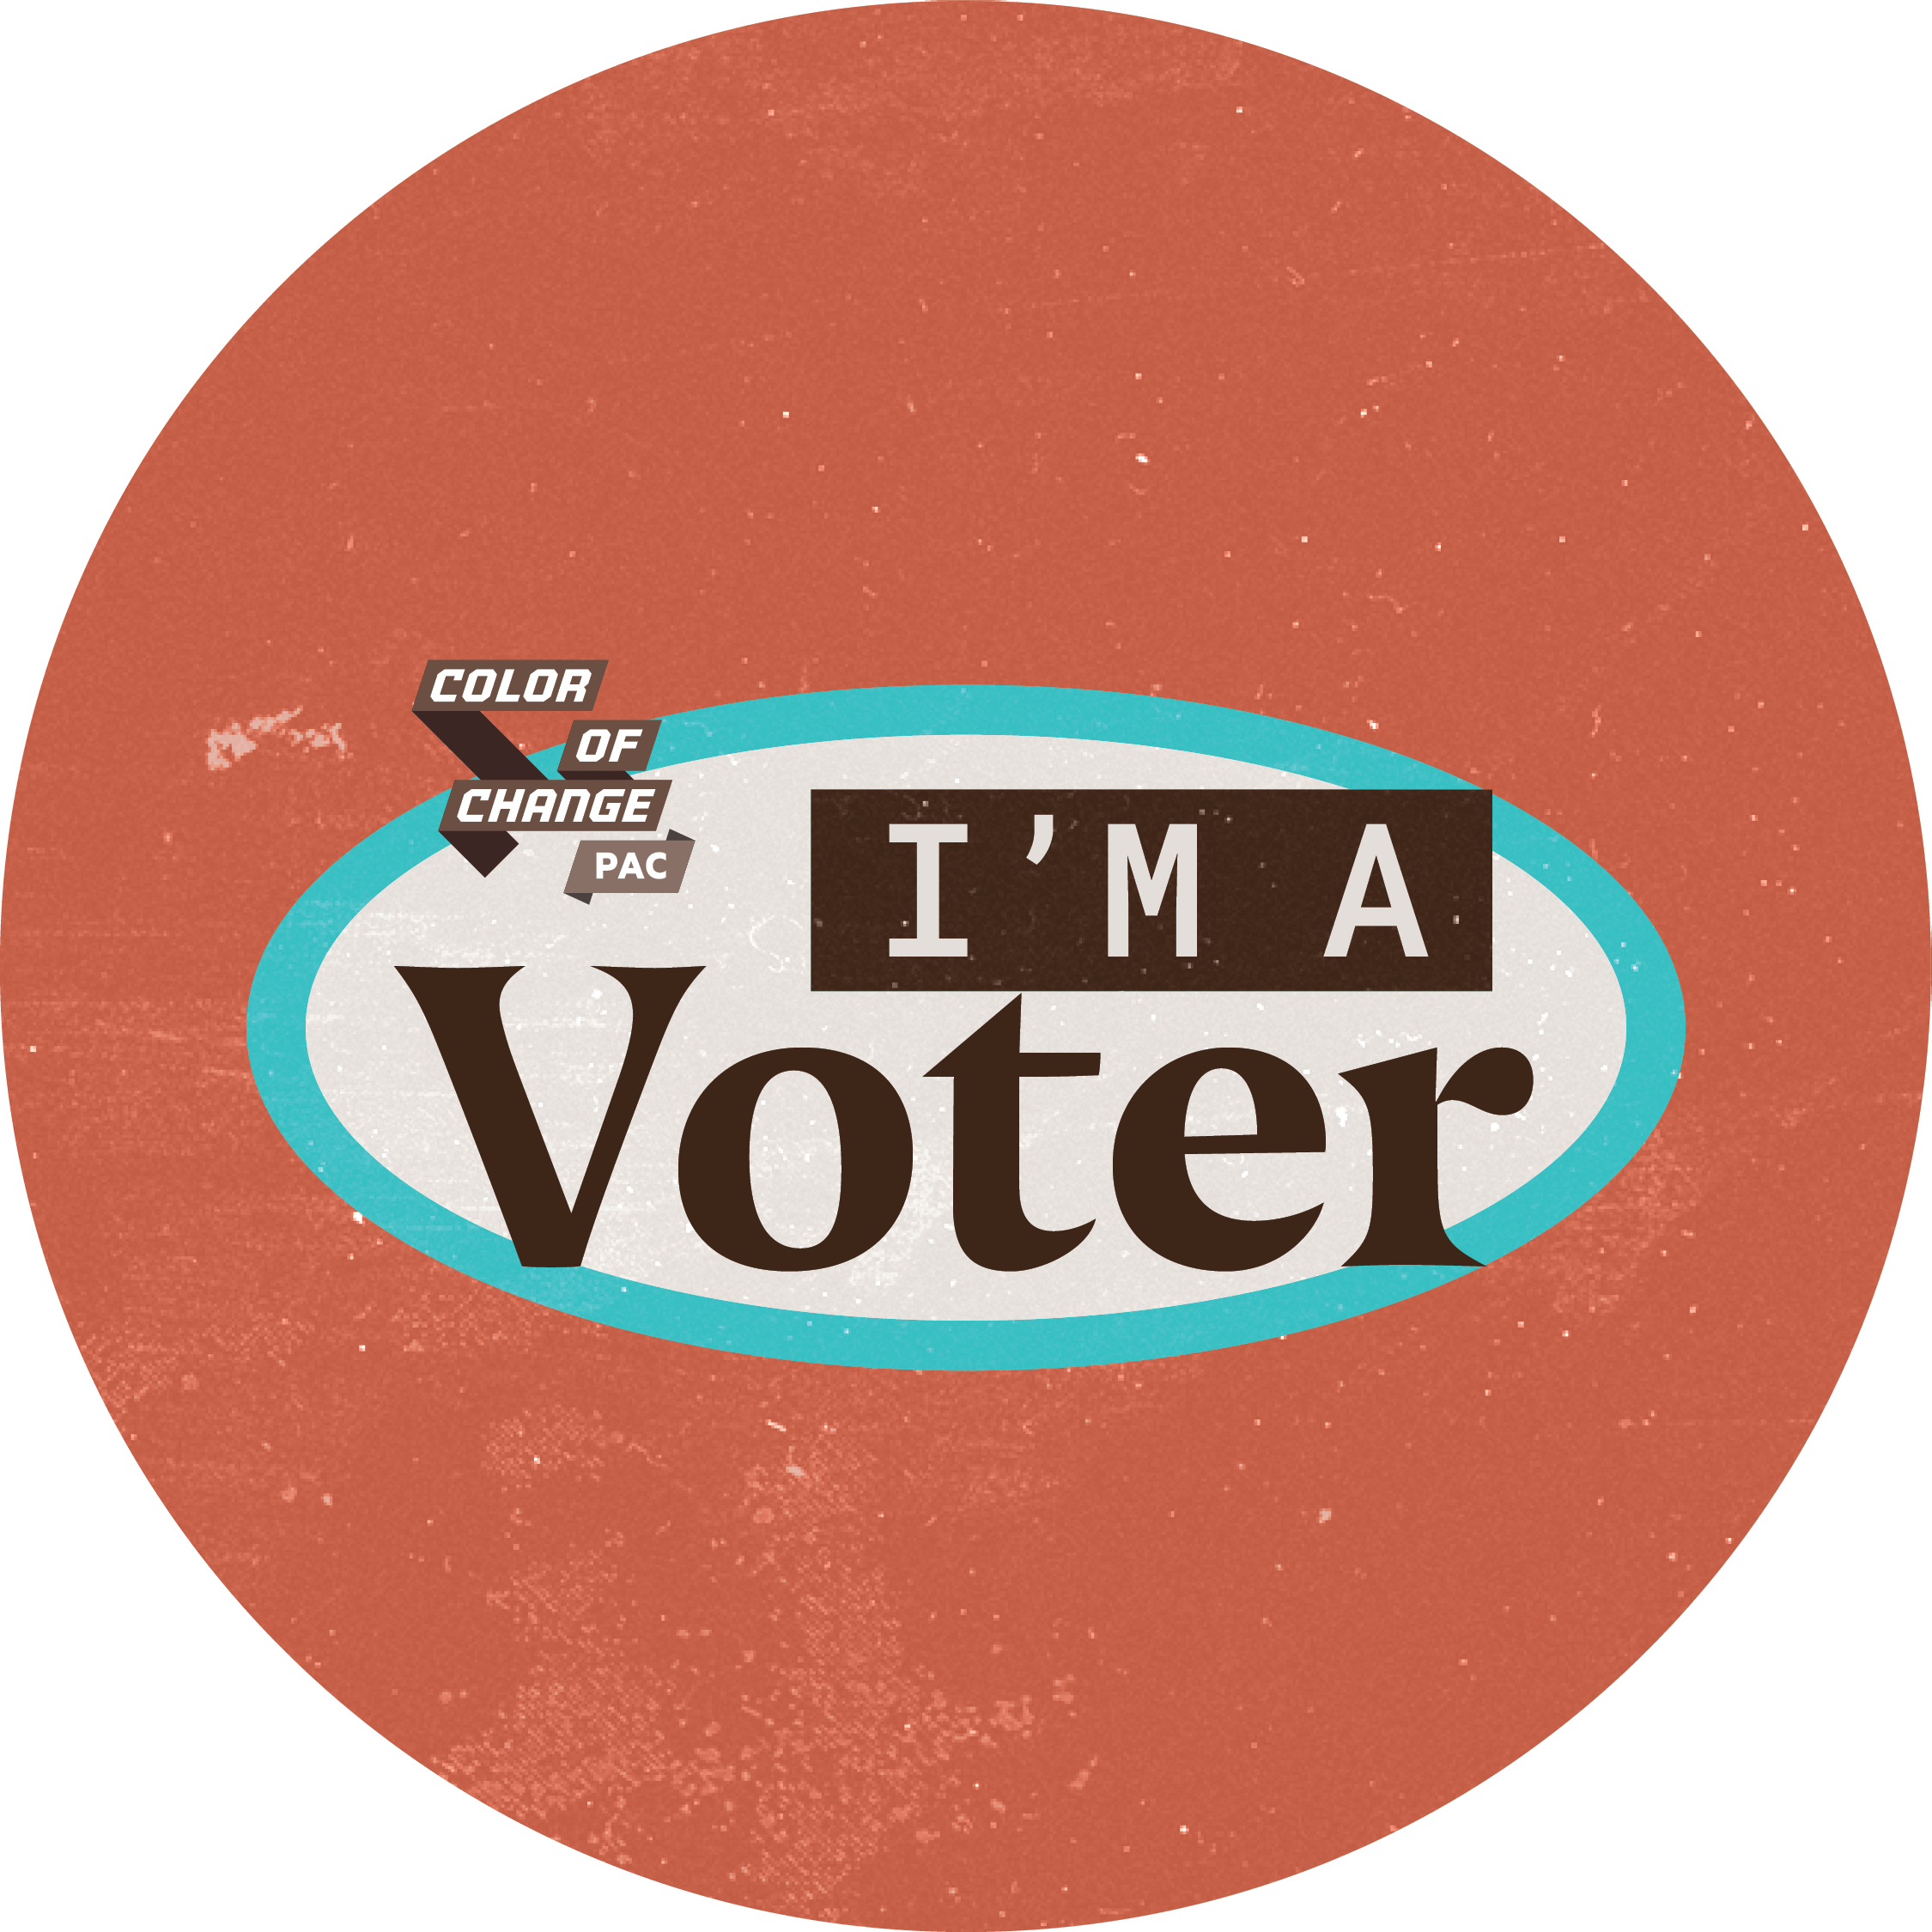 I'm a voter